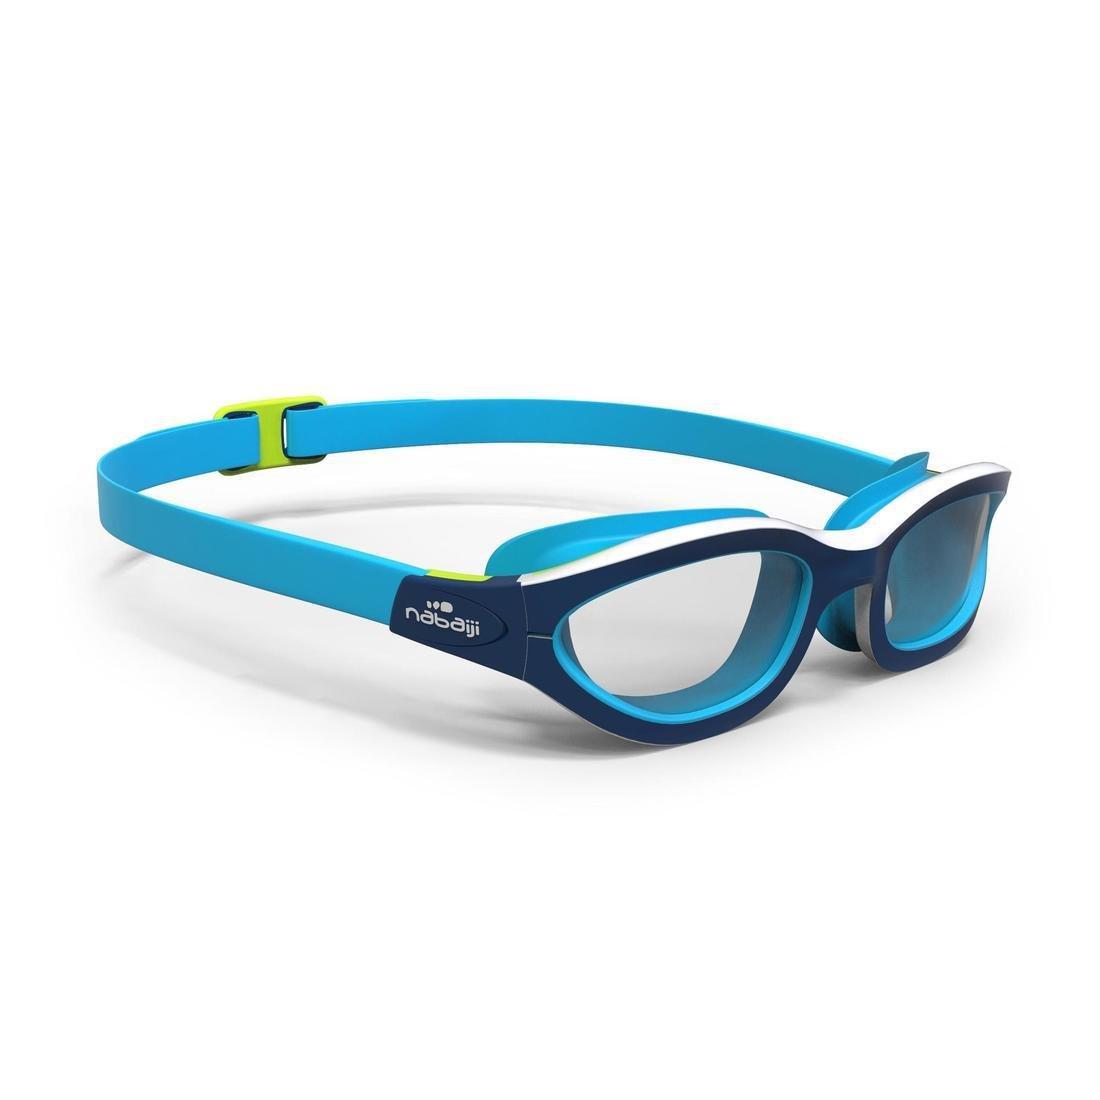 NABAIJI - Easydow Adult Swimming Goggles, Navy